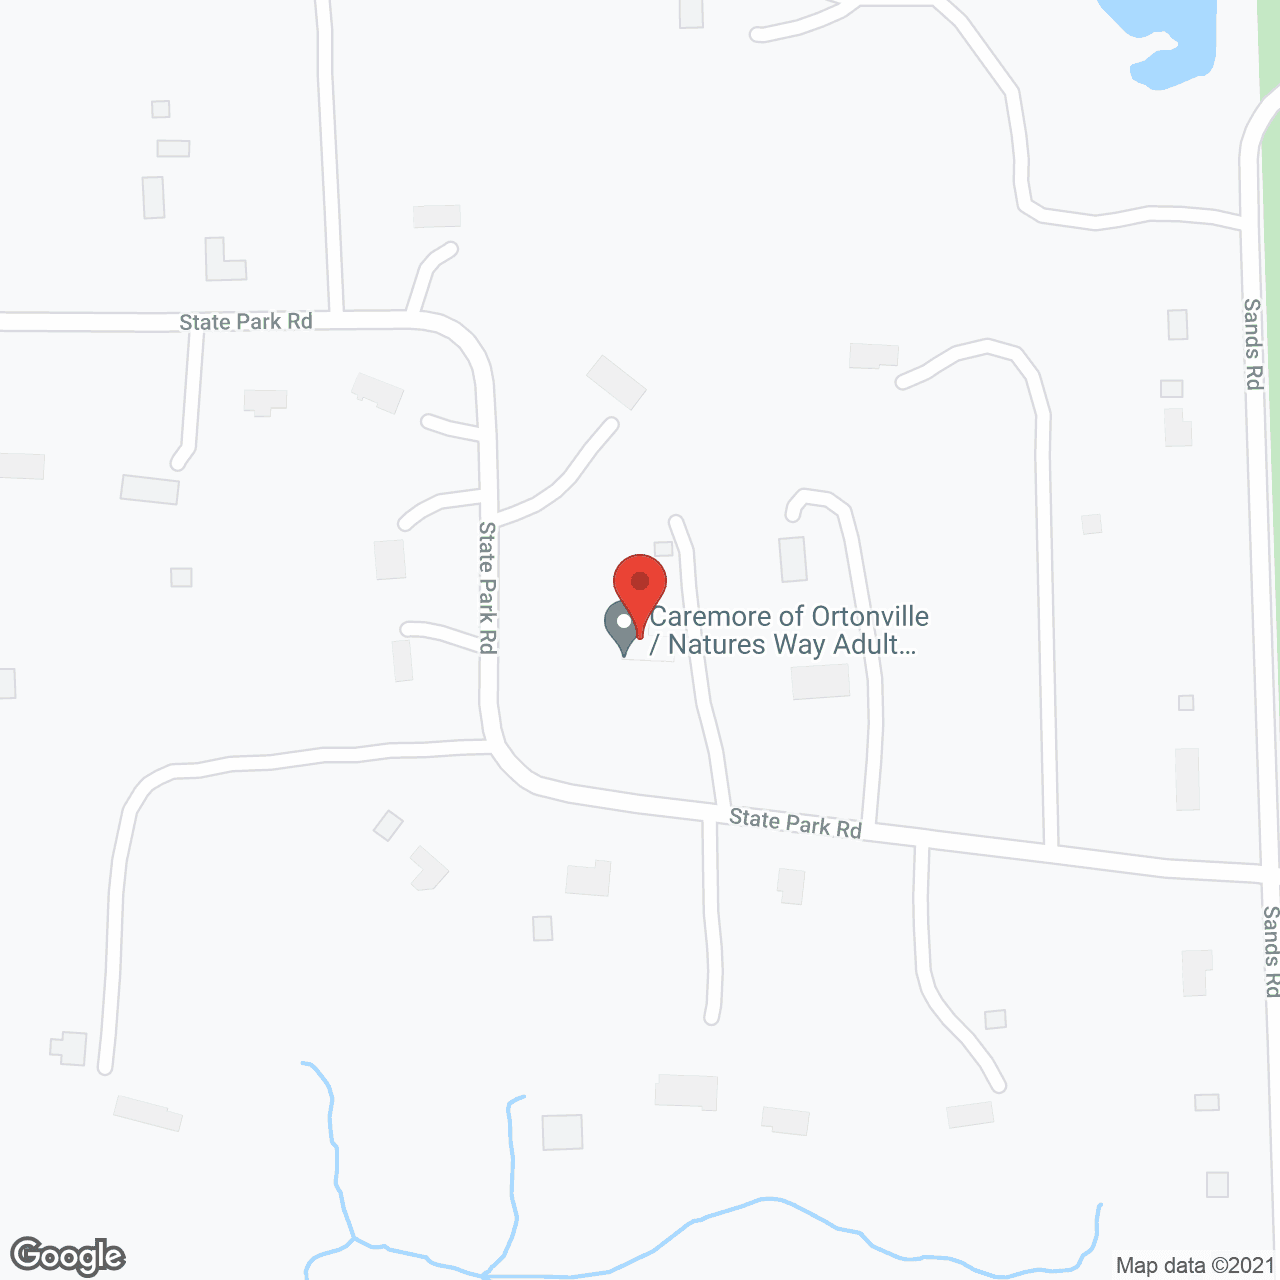 Caremore of Ortonville in google map